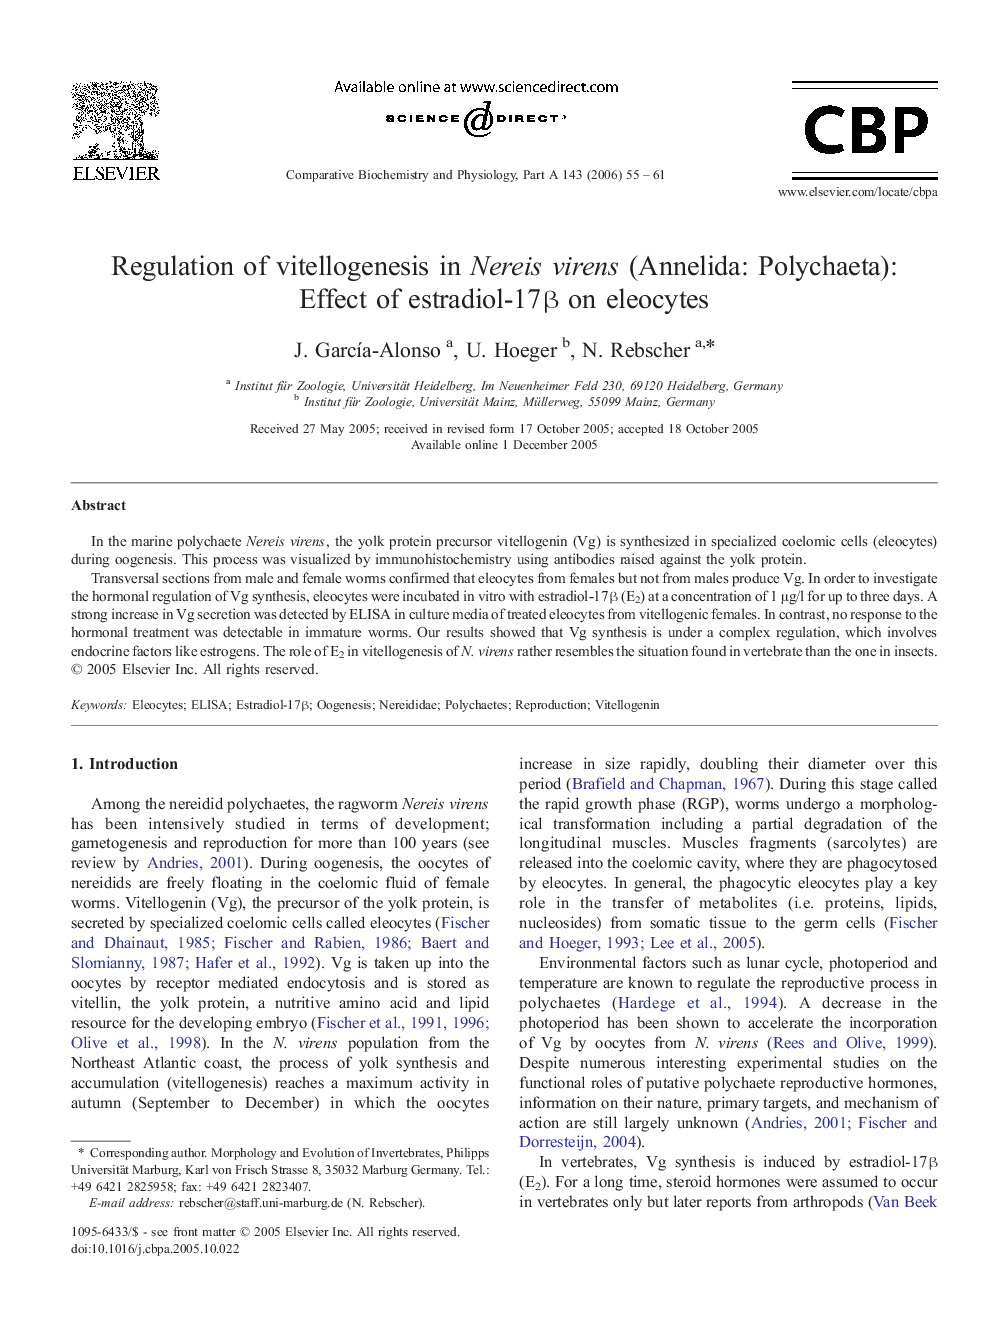 Regulation of vitellogenesis in Nereis virens (Annelida: Polychaeta): Effect of estradiol-17β on eleocytes